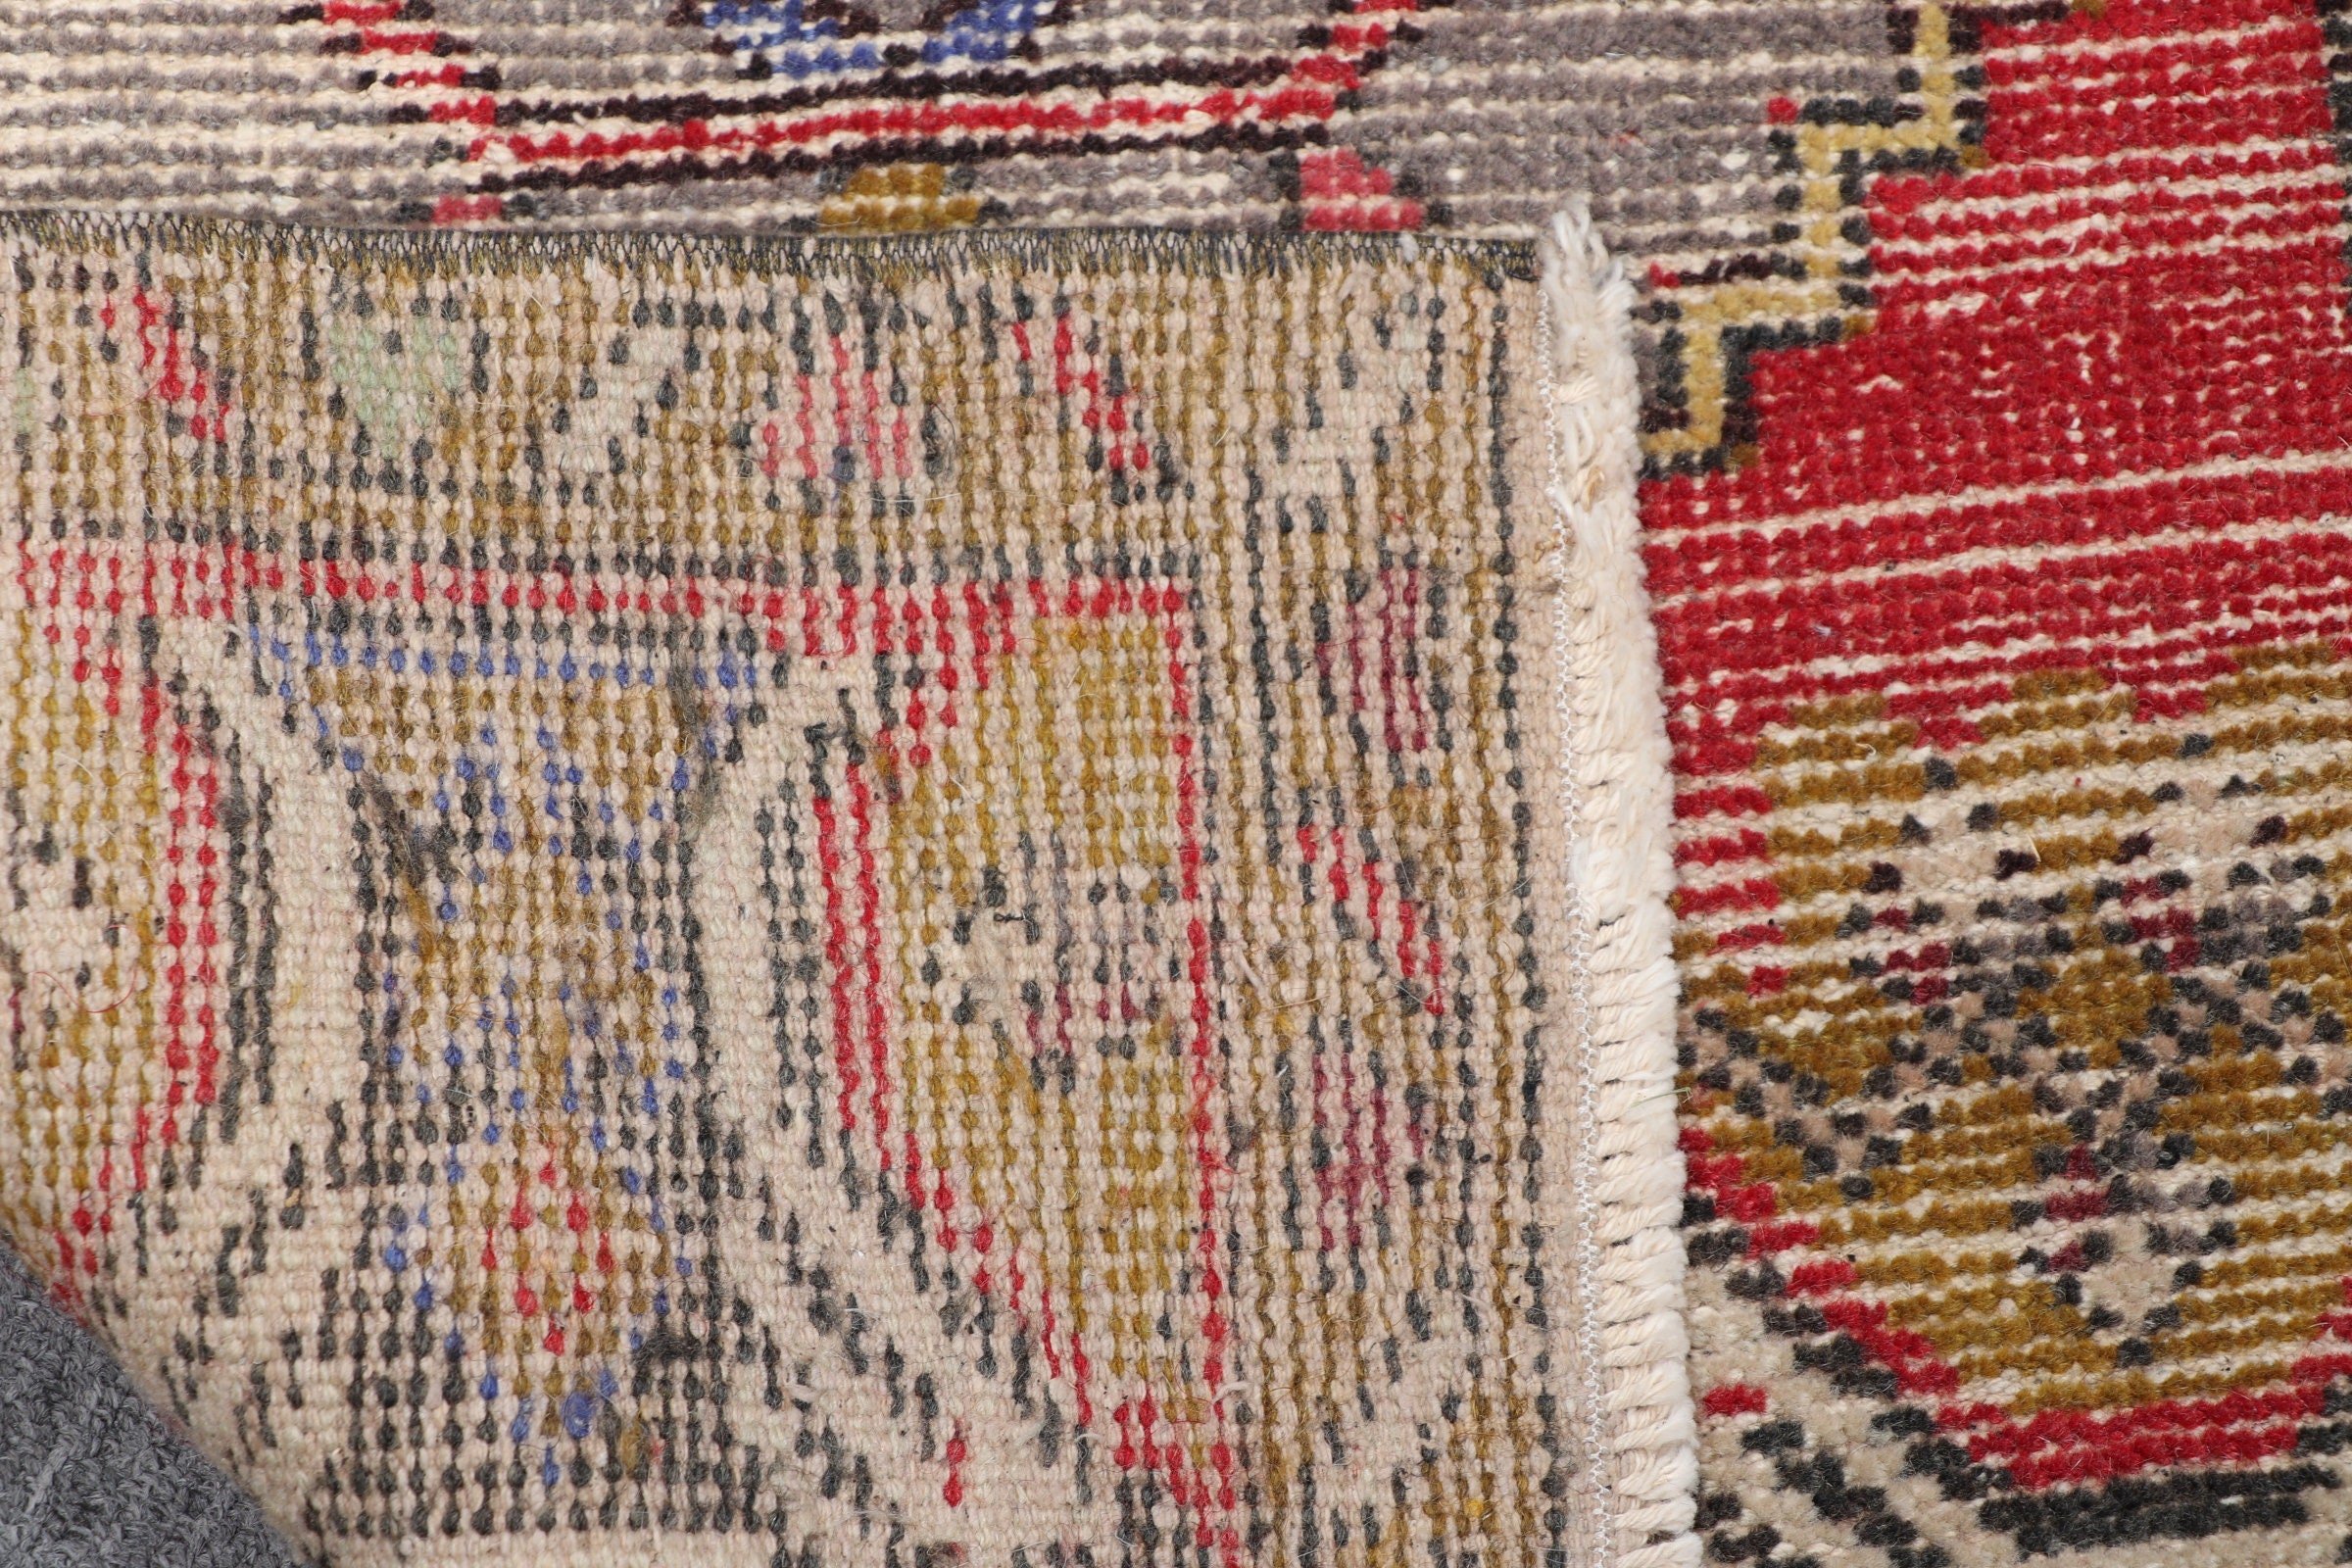 Anatolian Rugs, Entry Rugs, Turkish Rugs, Wool Rugs, Nomadic Rug, Red Moroccan Rug, Vintage Rugs, 1.7x3.2 ft Small Rug, Wall Hanging Rug